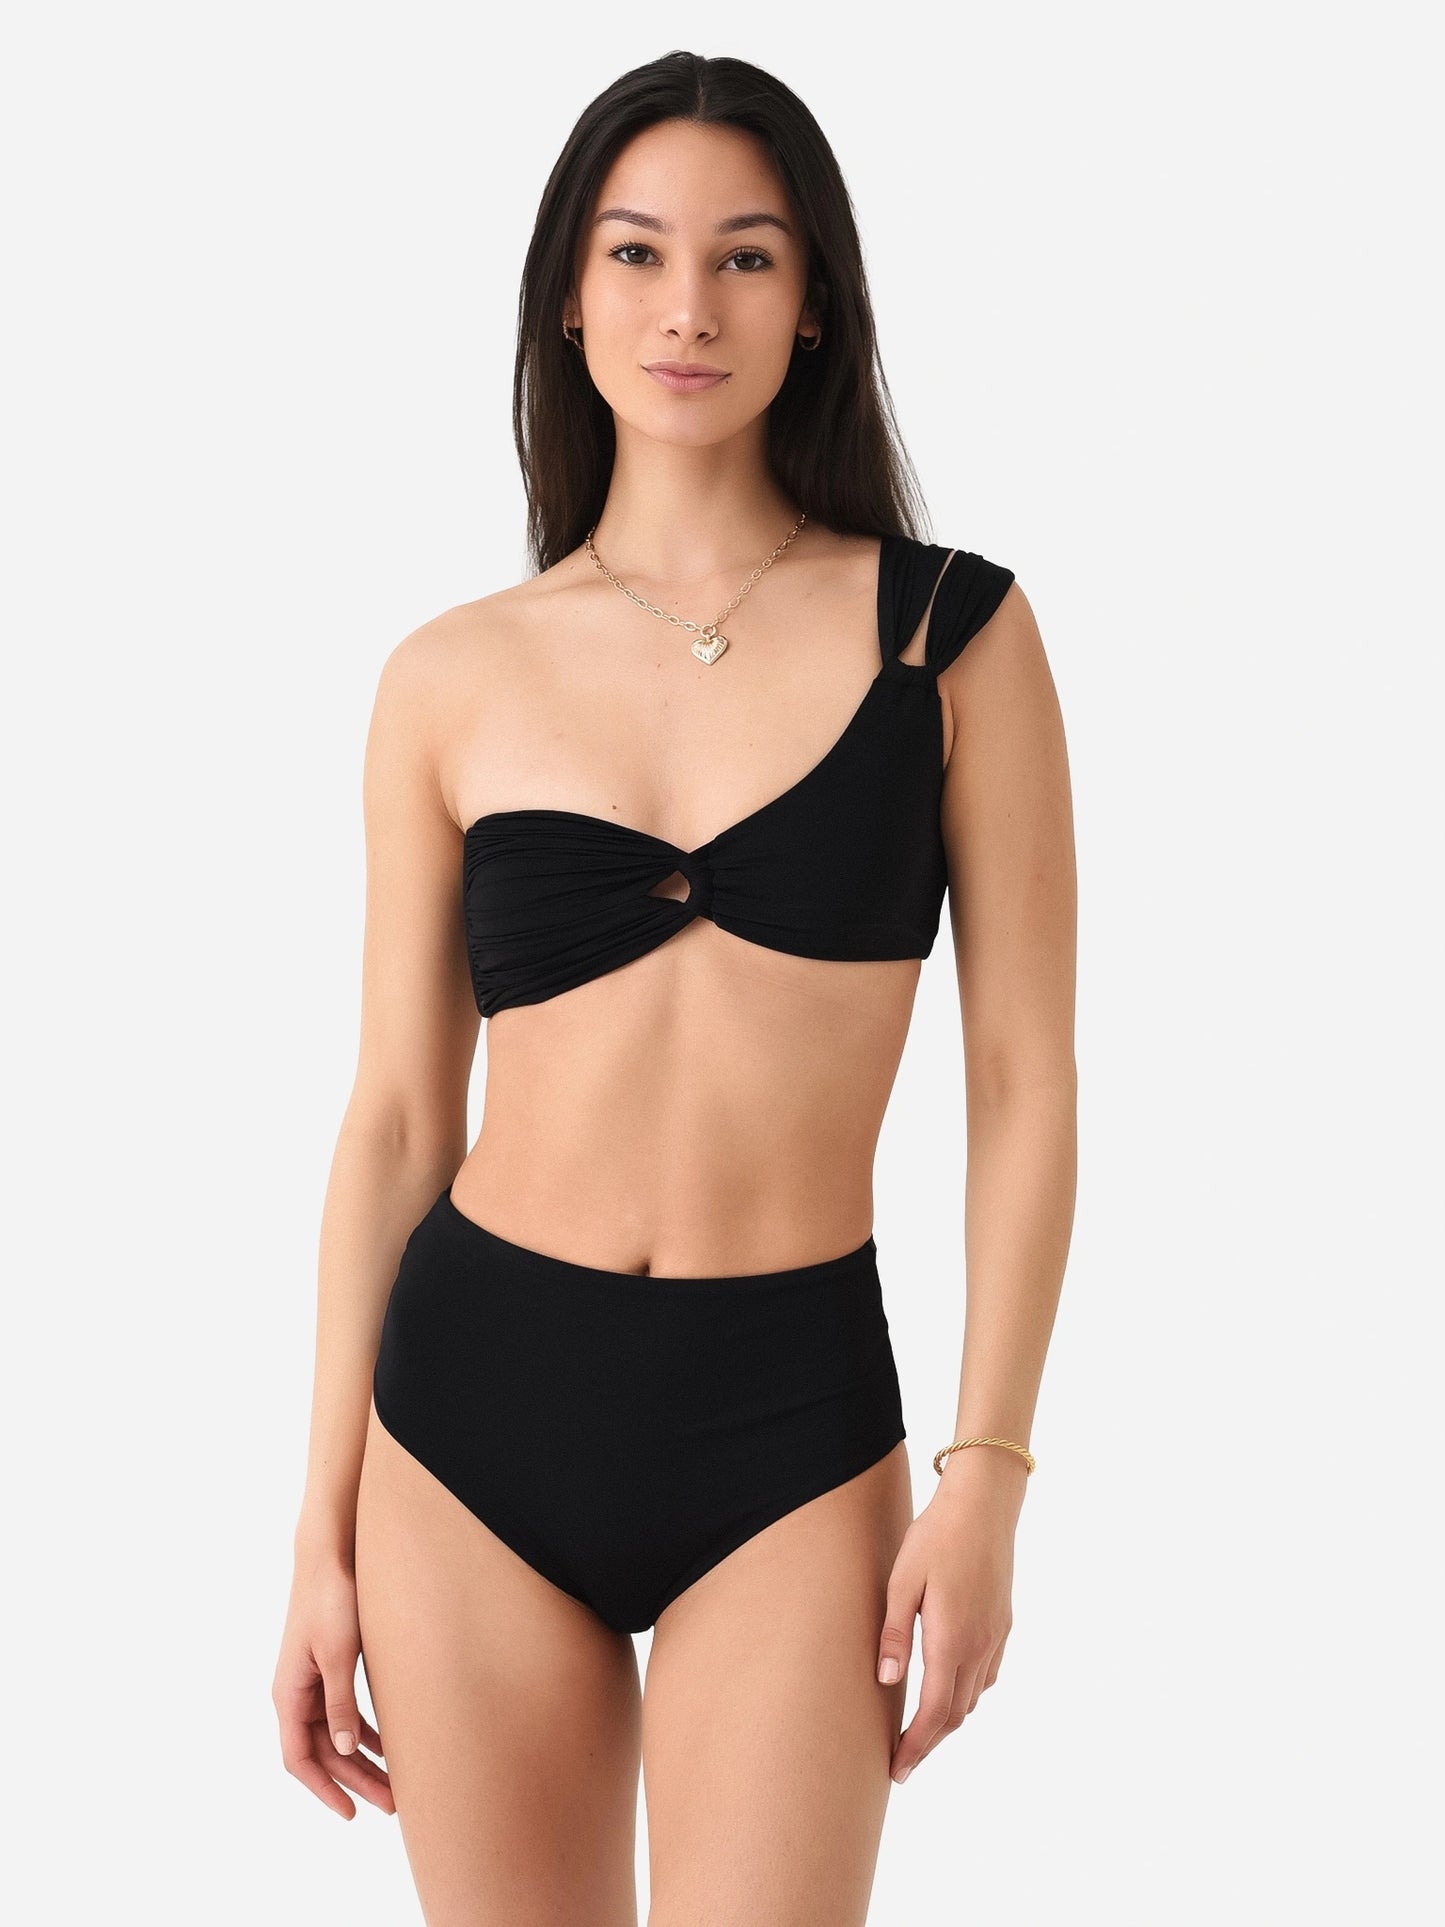 Maygel Coronel Women's Caan Bikini Set